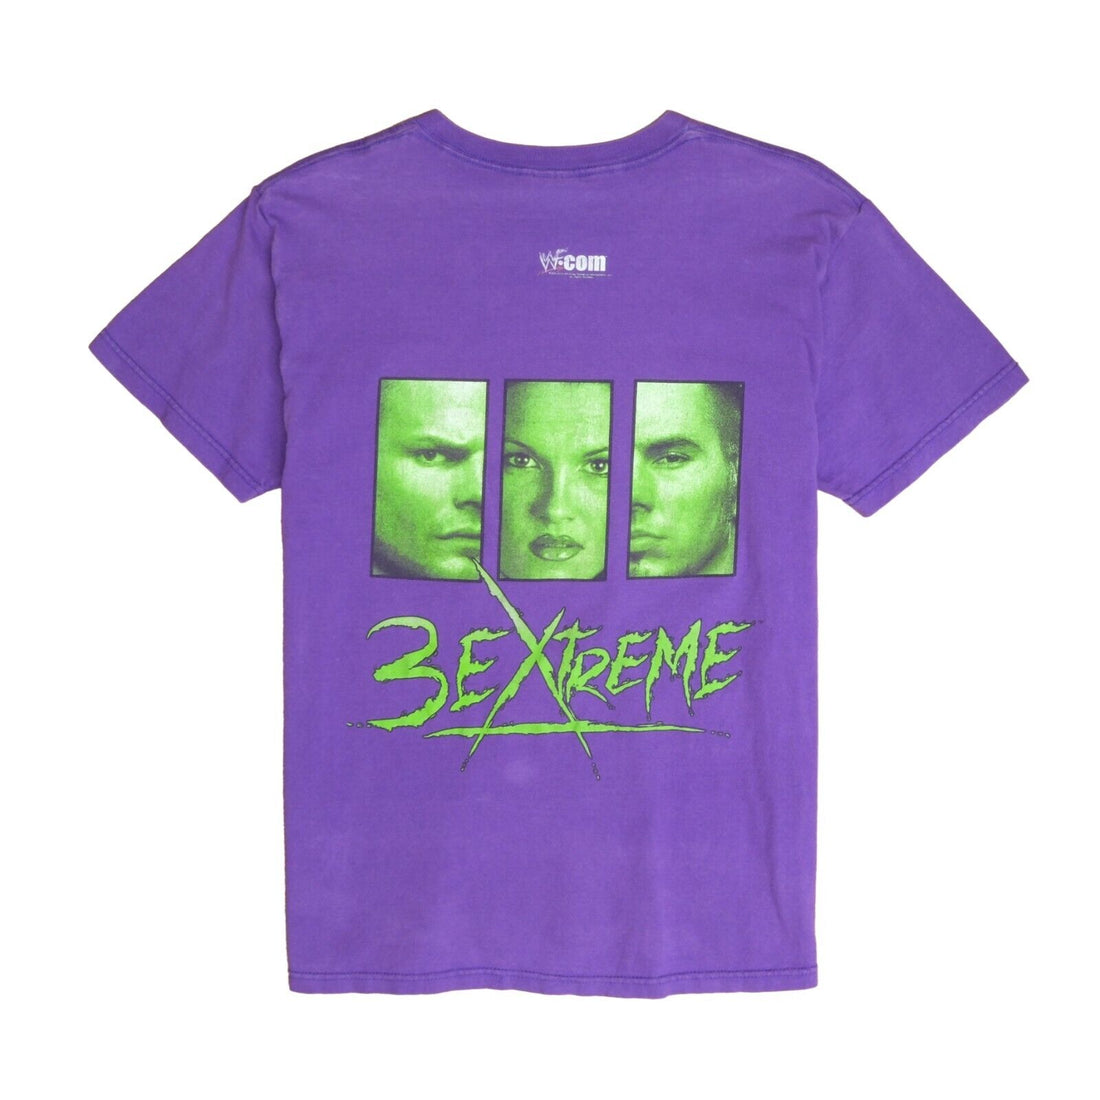 Vintage Team 3-Xtreme Wrestling T-Shirt Size Medium Jeff Matt Hardy Lita WWF